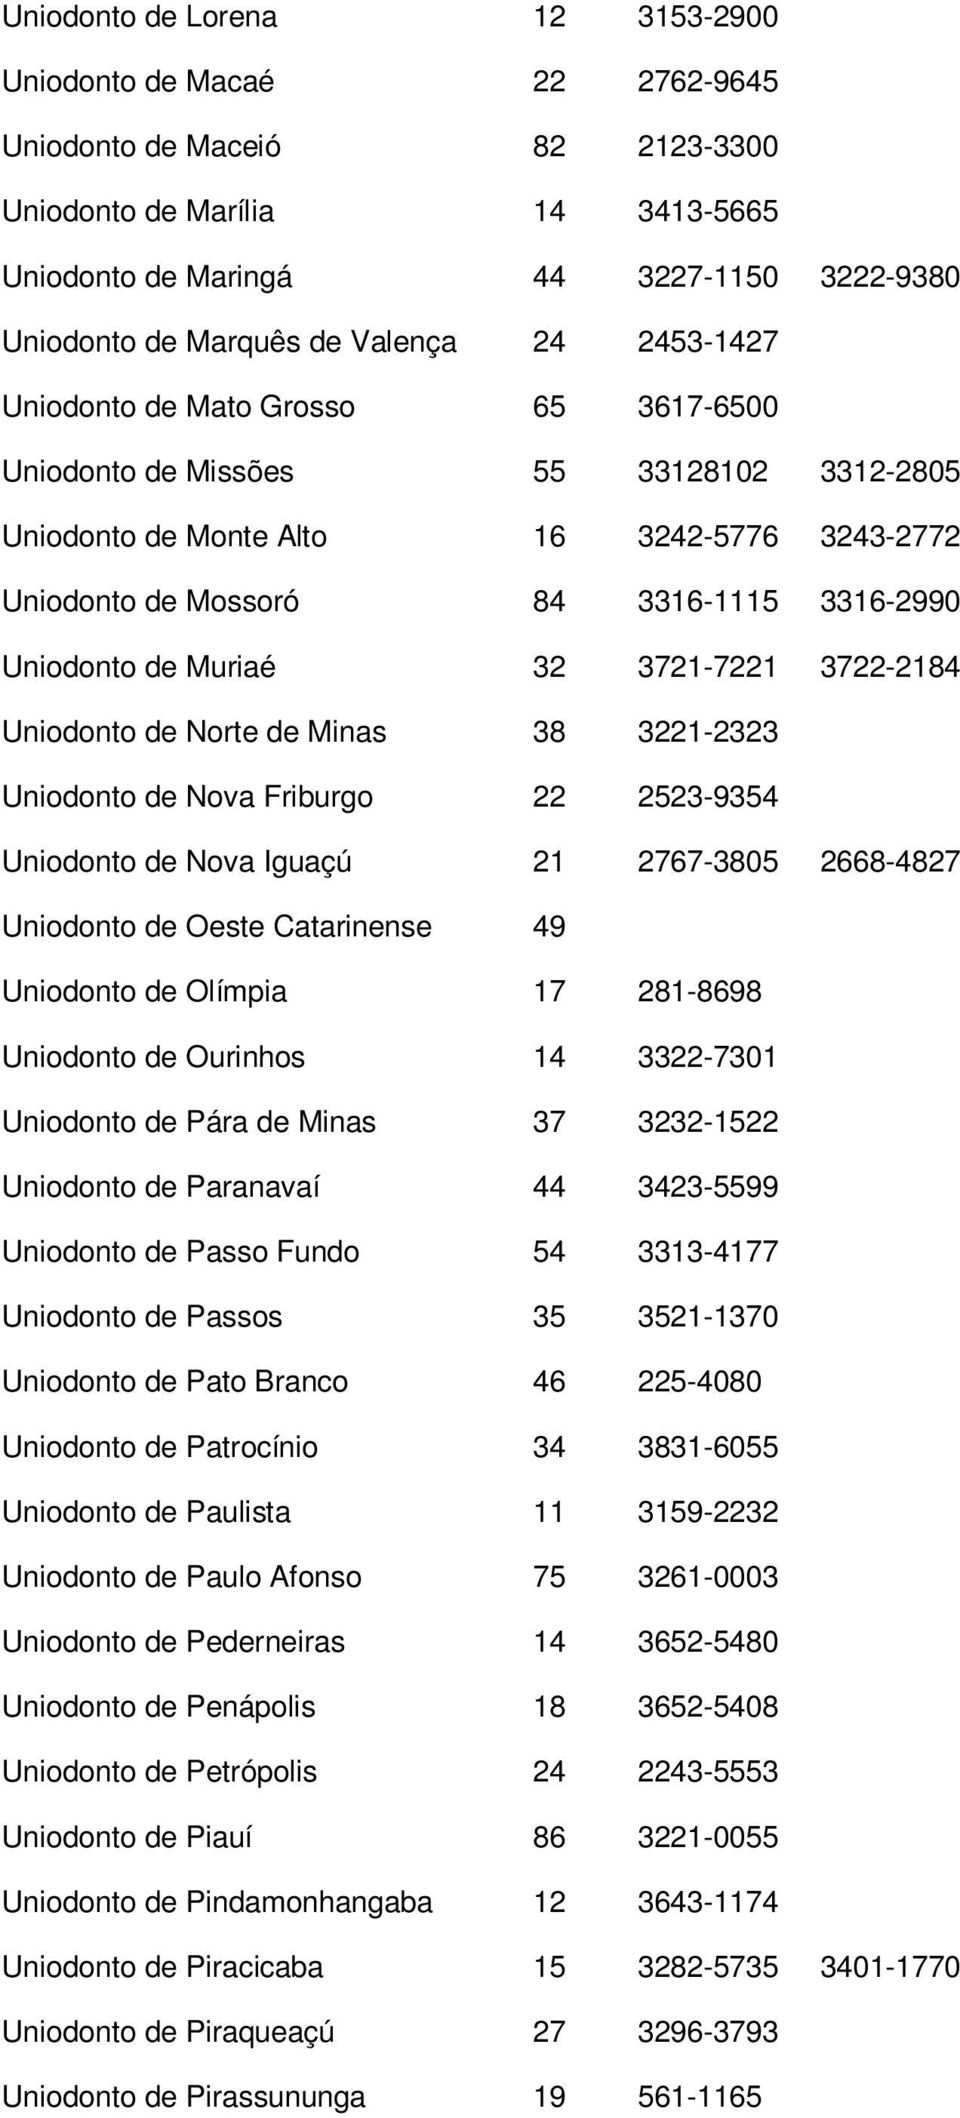 Uniodonto de Muriaé 32 3721-7221 3722-2184 Uniodonto de Norte de Minas 38 3221-2323 Uniodonto de Nova Friburgo 22 2523-9354 Uniodonto de Nova Iguaçú 21 2767-3805 2668-4827 Uniodonto de Oeste